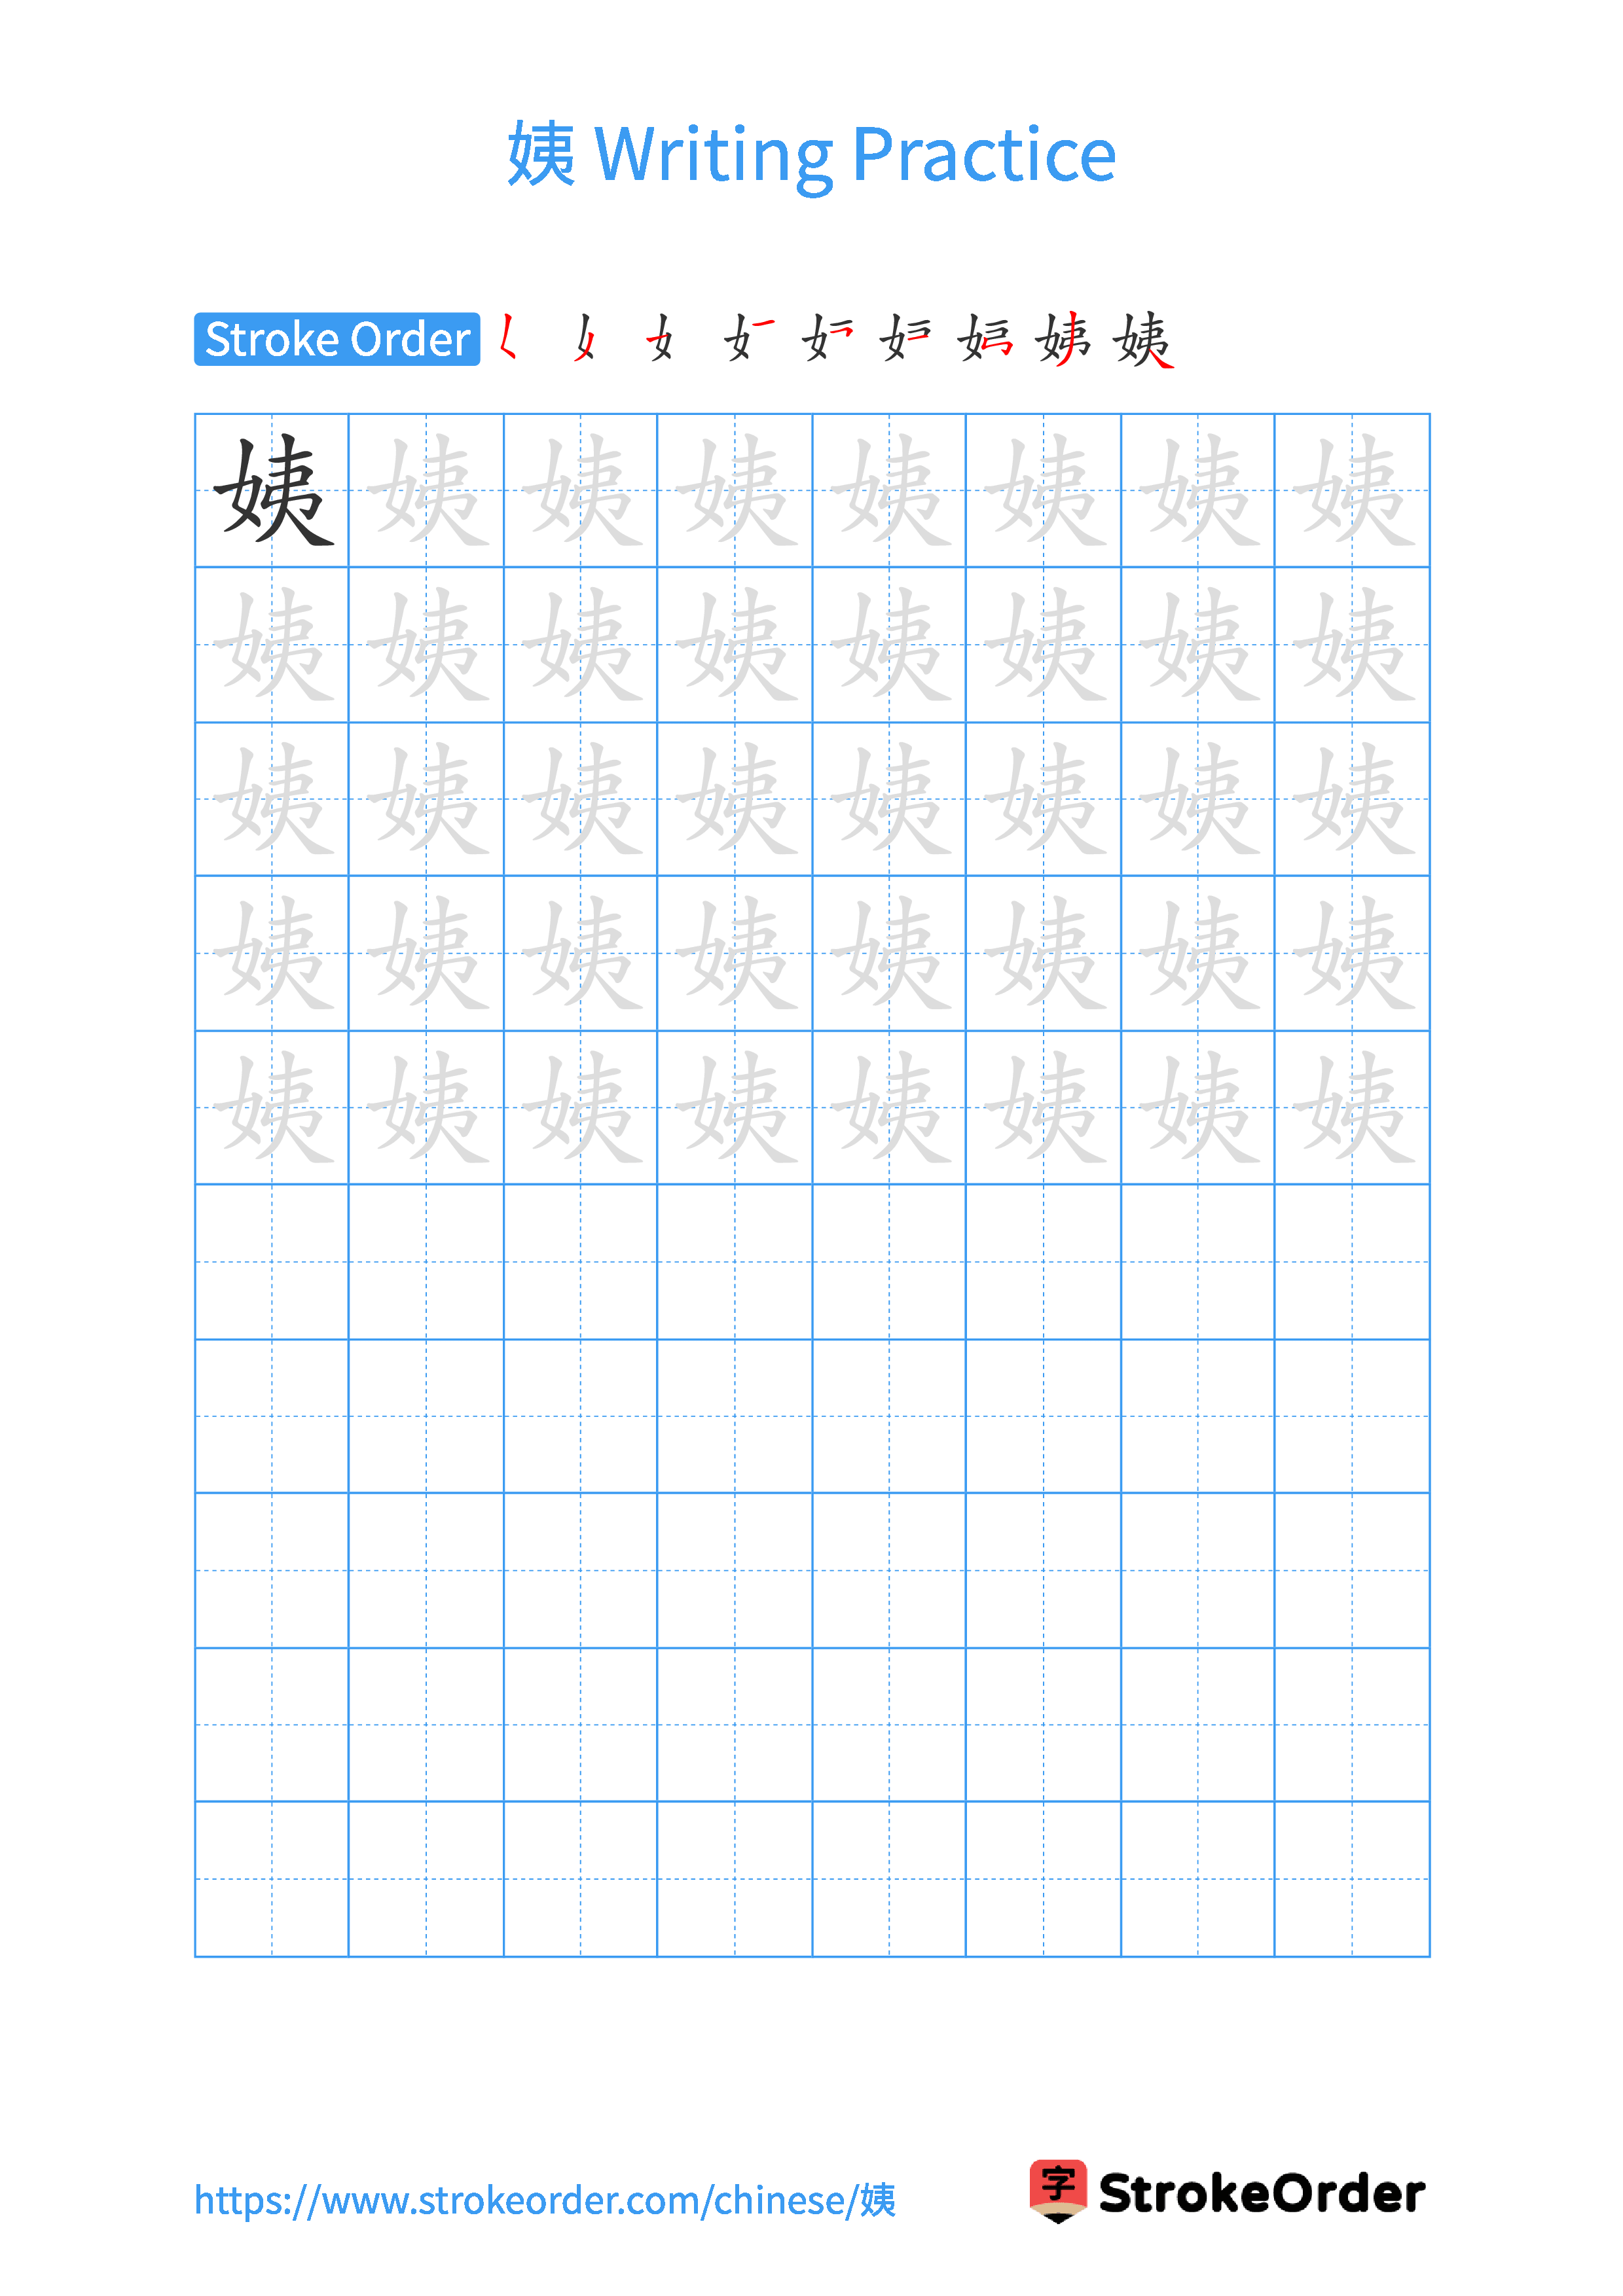 Printable Handwriting Practice Worksheet of the Chinese character 姨 in Portrait Orientation (Tian Zi Ge)